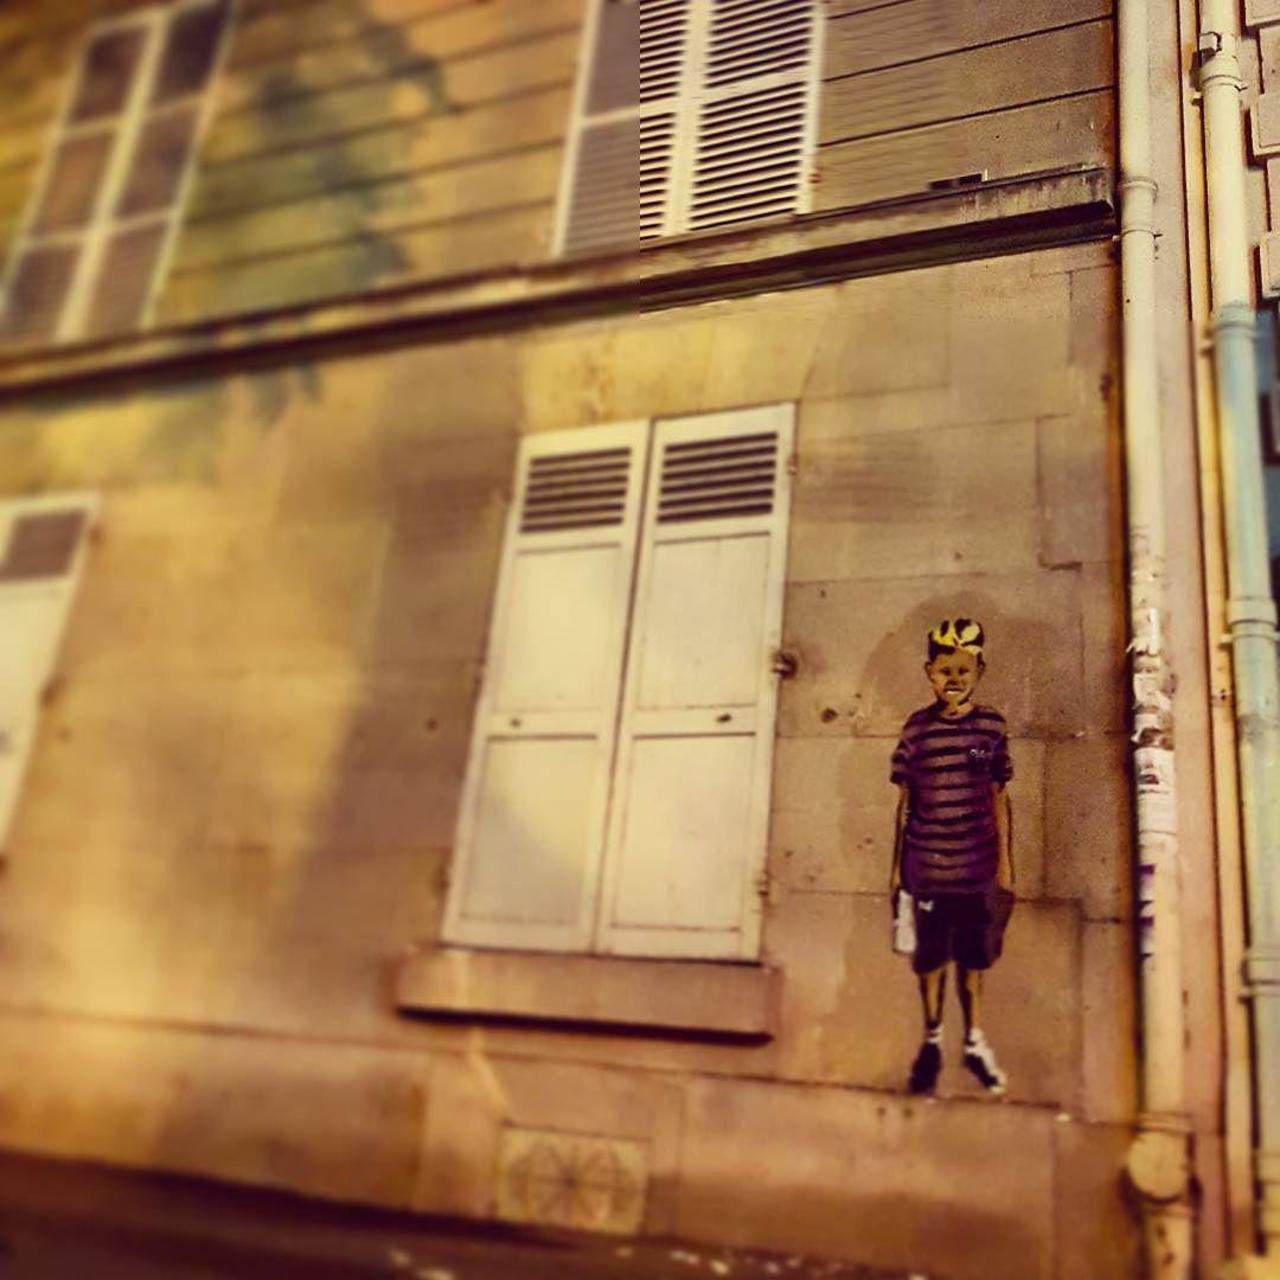 #Paris #graffiti photo by @the169 http://ift.tt/1Z8EYOd #StreetArt http://t.co/4KAim2CJeD